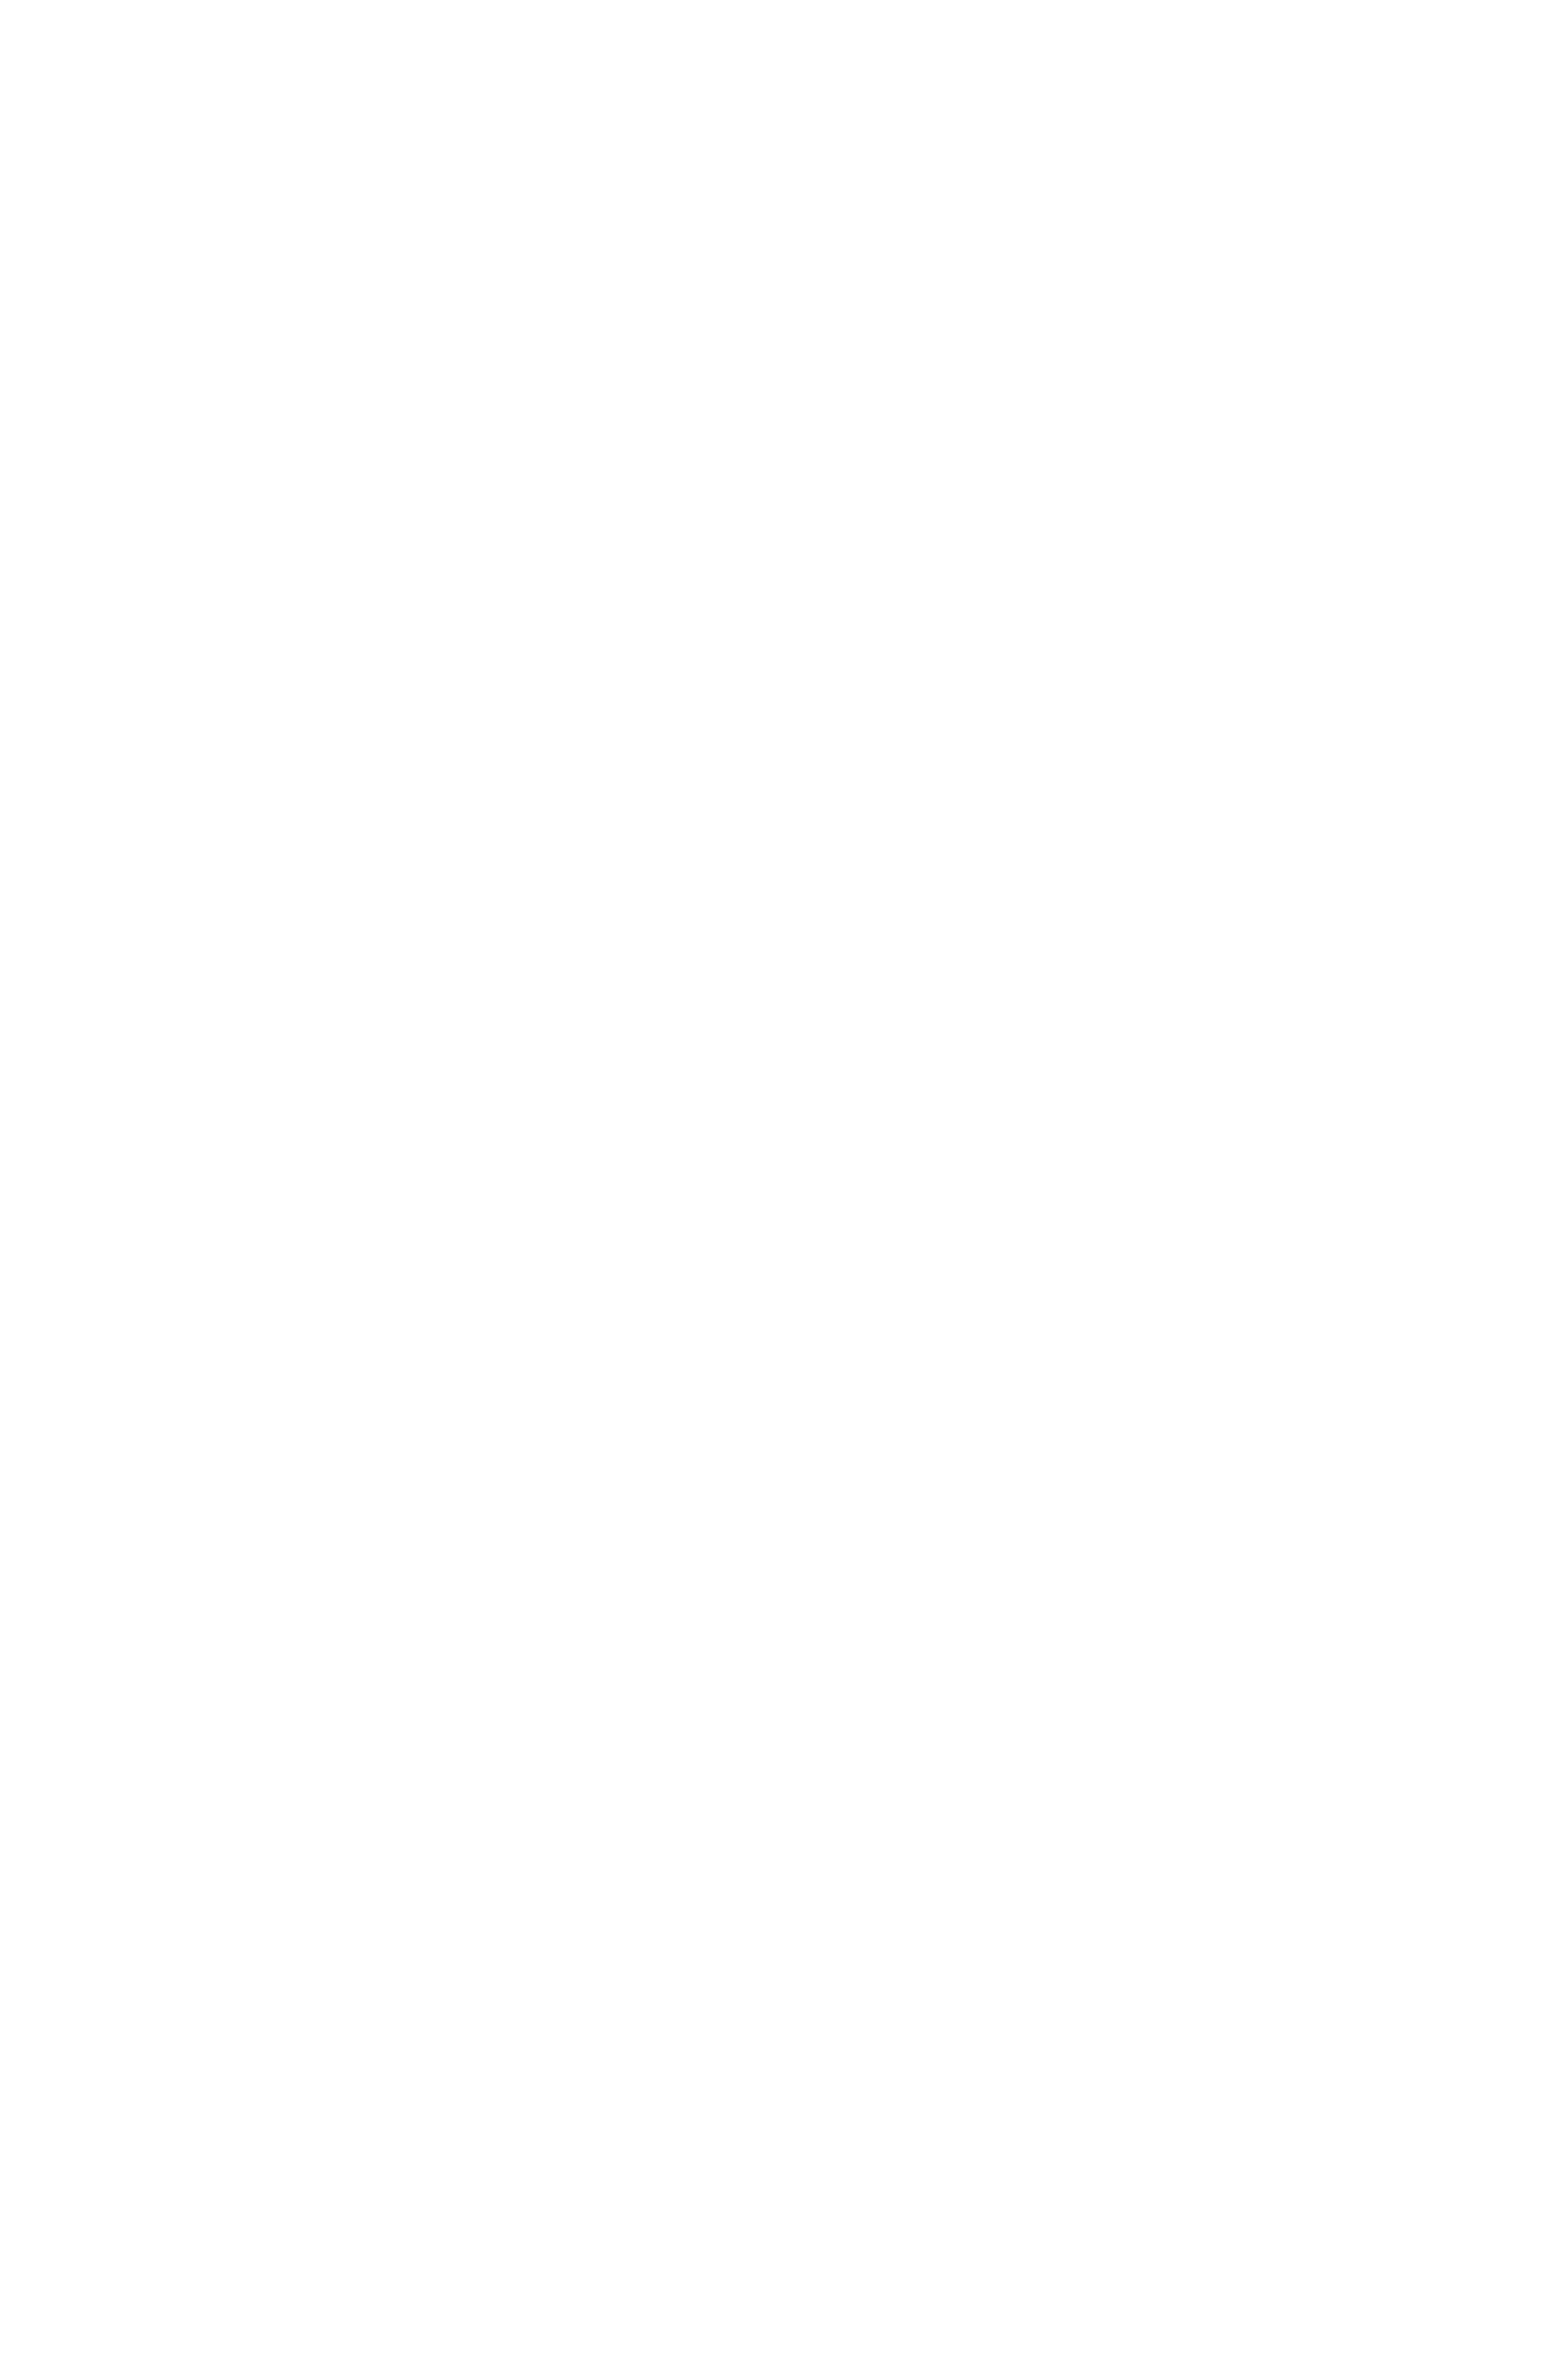 Sola Stekepanne Onyx i karbonstål Ø 20 cm